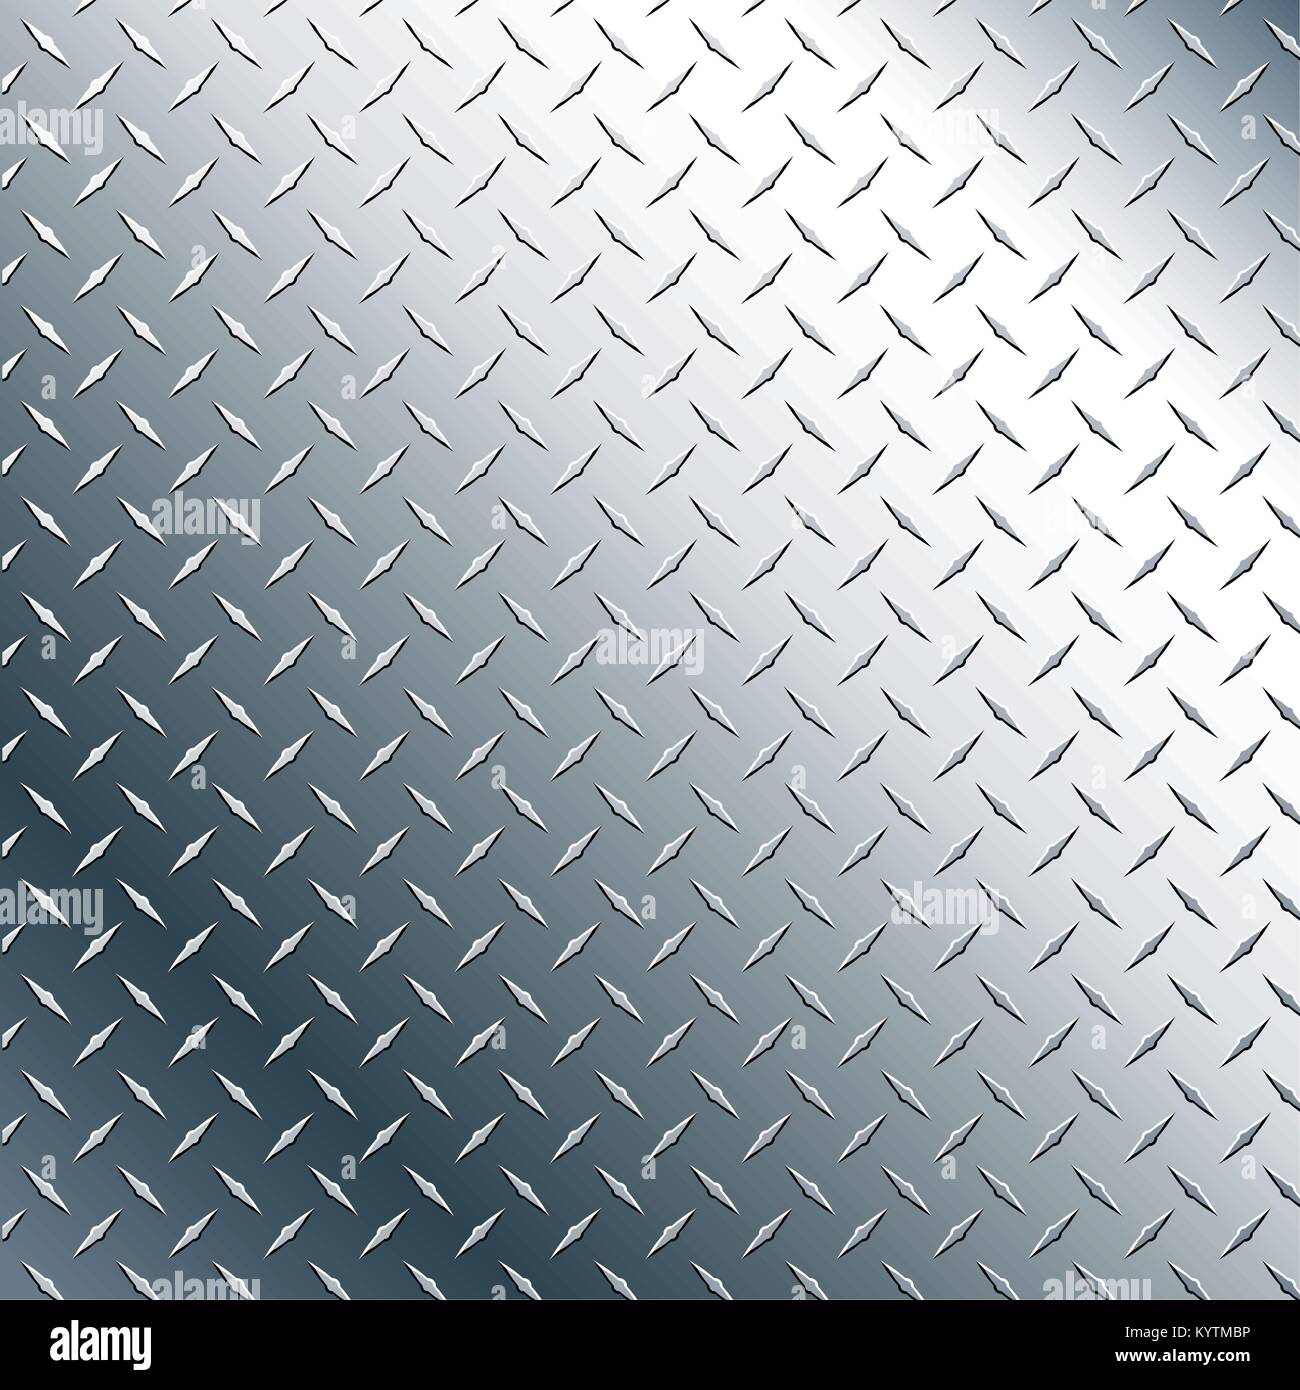 Chrom Diamond Plate realistische Vector Graphic Illustration Stock Vektor